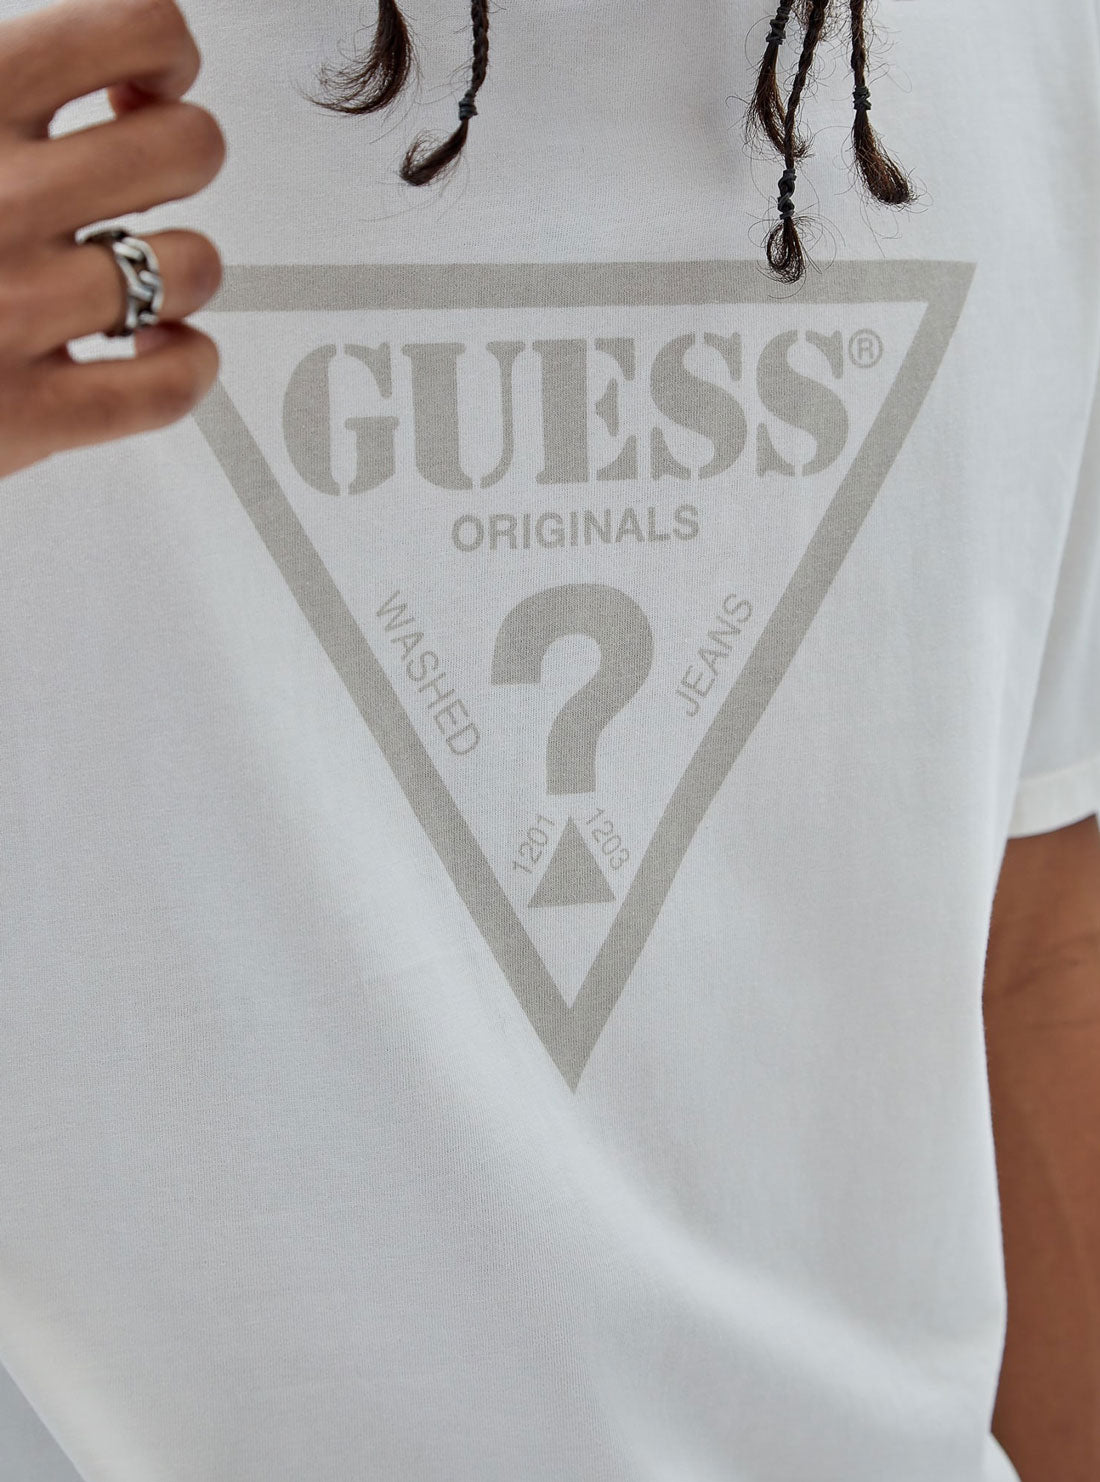 Guess Originals White Vintage Triangle Logo T-Shirt | GUESS men's apparel | detail view